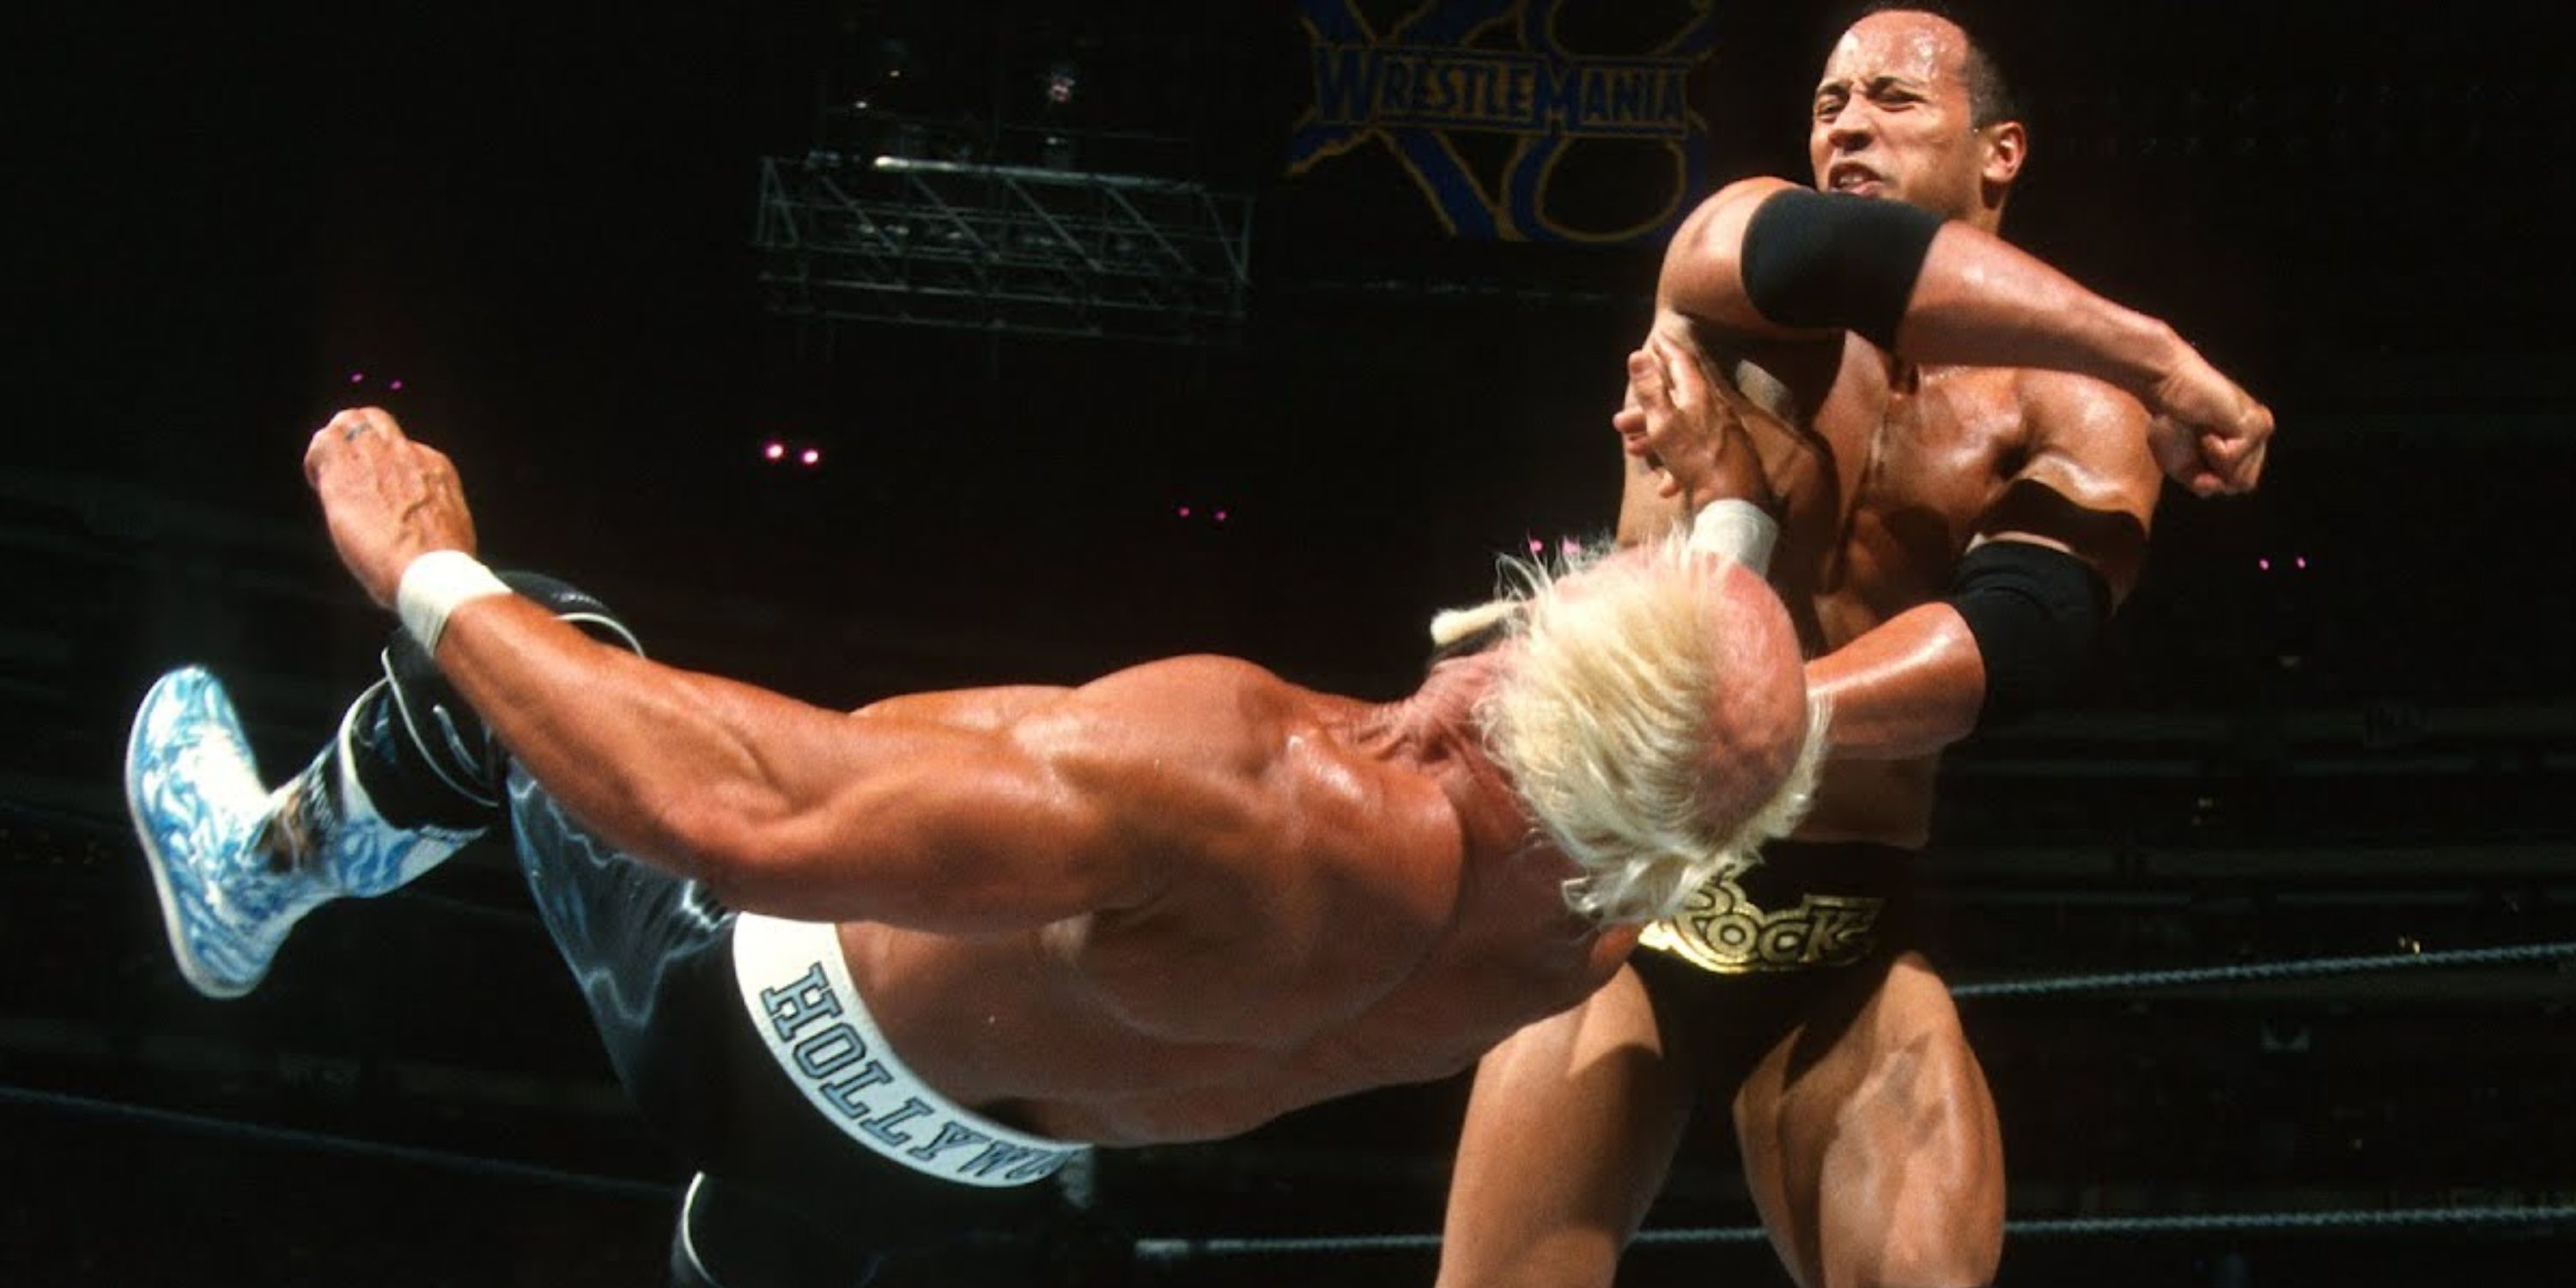 The Rock vs Hulk Hogan at WrestleMania 18